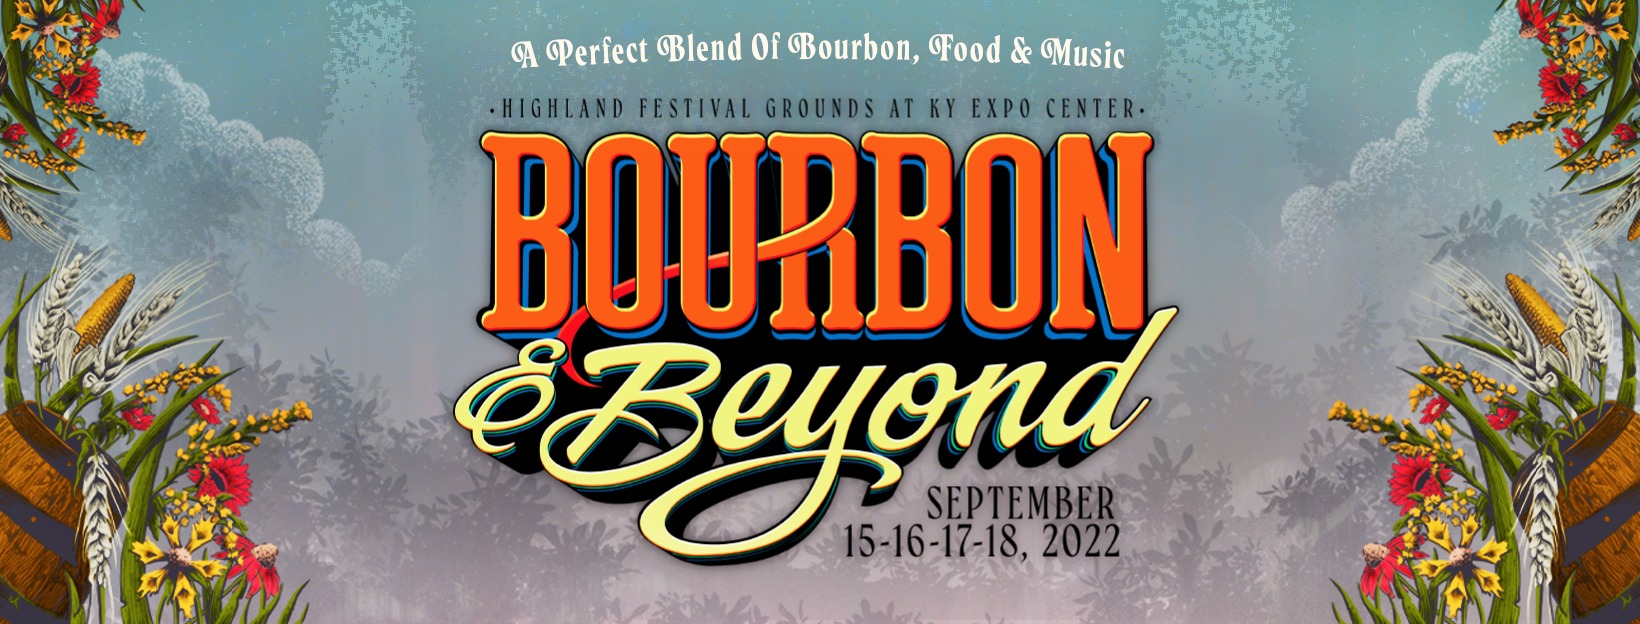 Bourbon & Beyond Is Back - World’s Largest Bourbon & Music Festival Returns To Louisville September 15-18